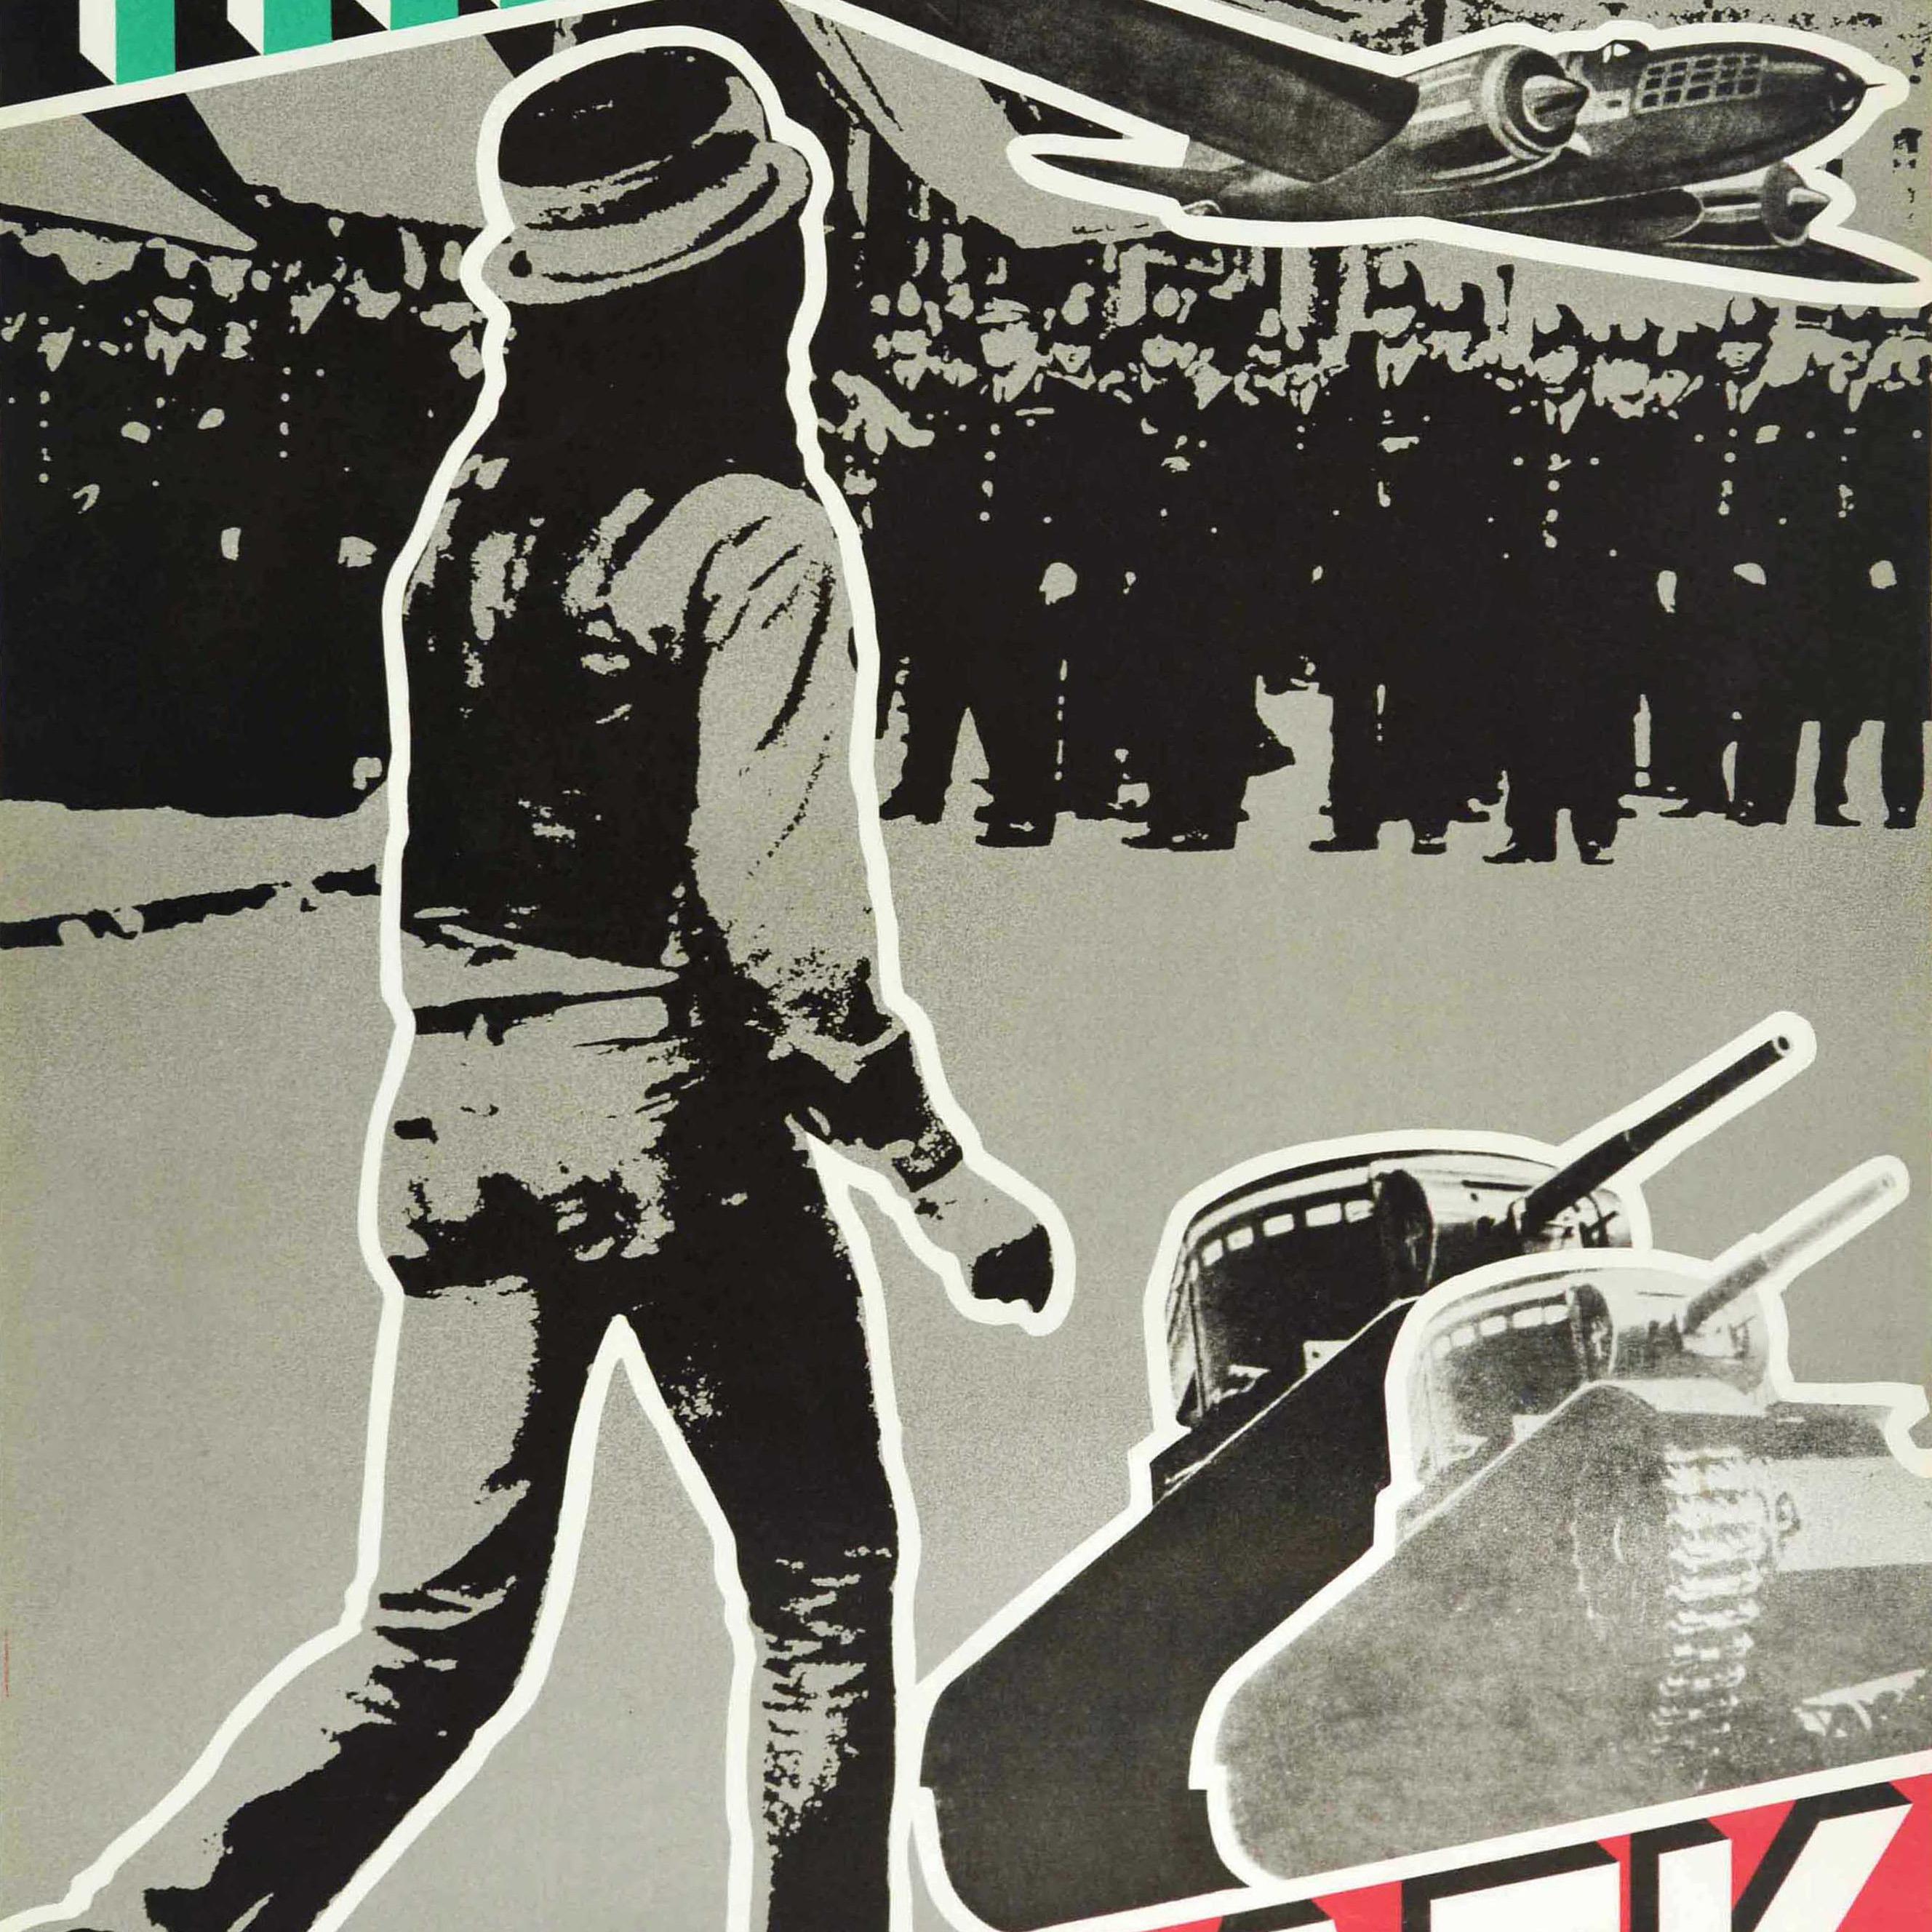 Original Vintage Music Advertising Poster The Clash Punk Rock Black Market Clash - Print by Unknown